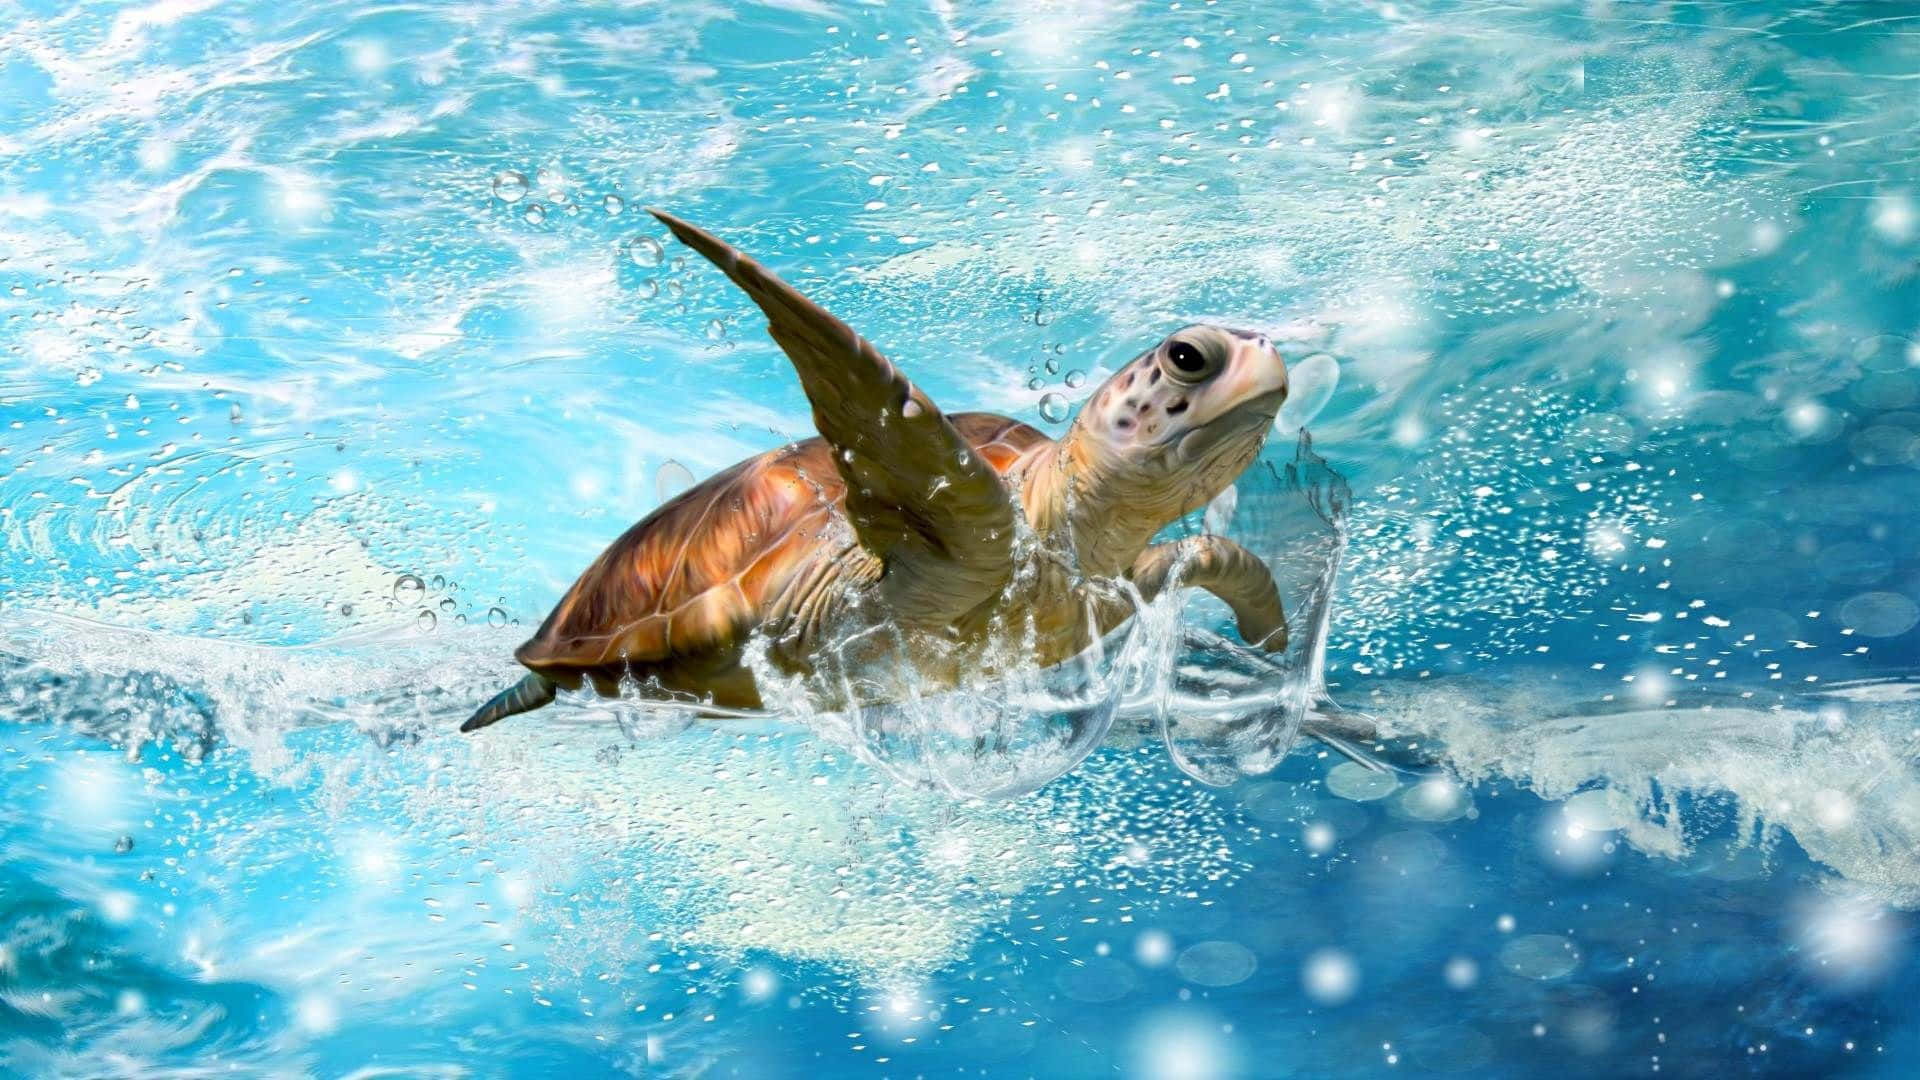 Enhavskildpadde, Der Svømmer I Vandet